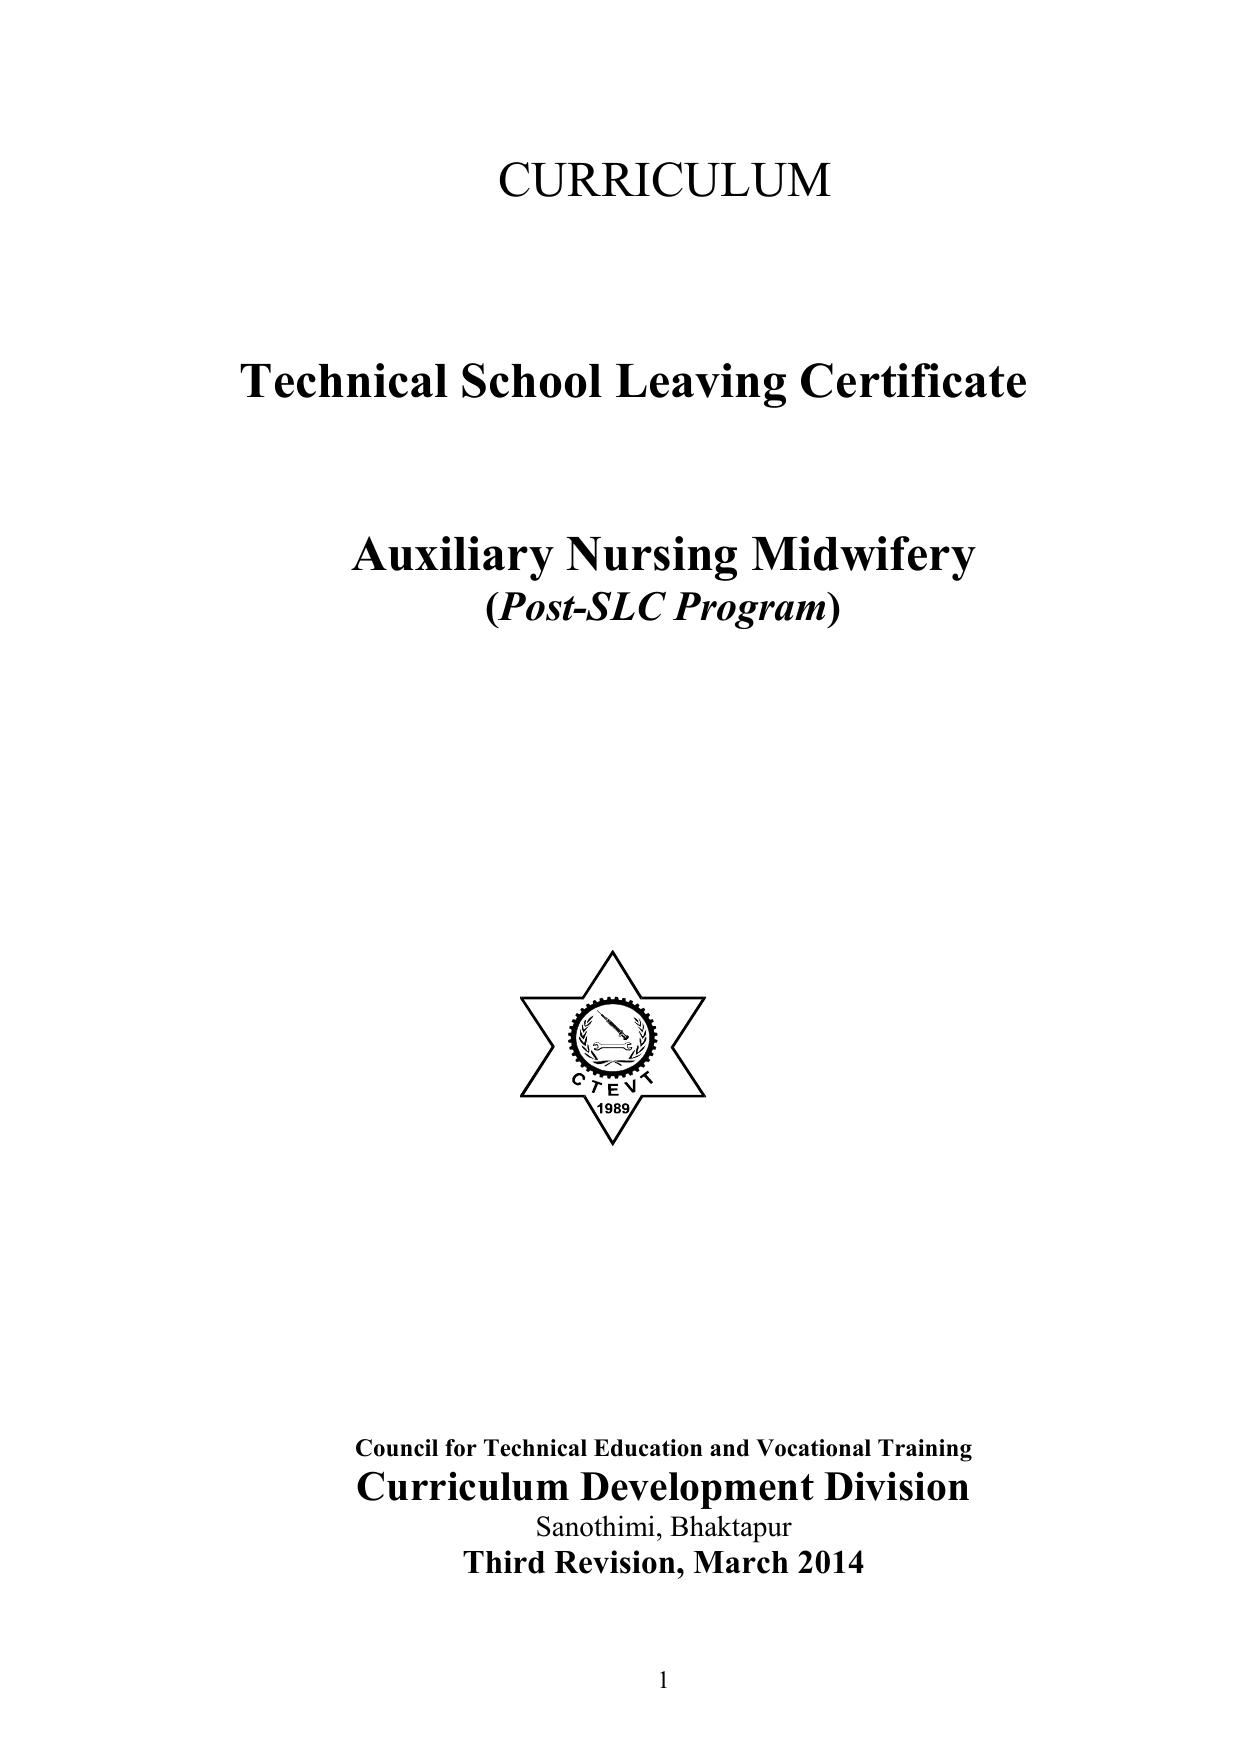 Auxiliary Nursing Midwifery (ANM) Post SLC, 2014